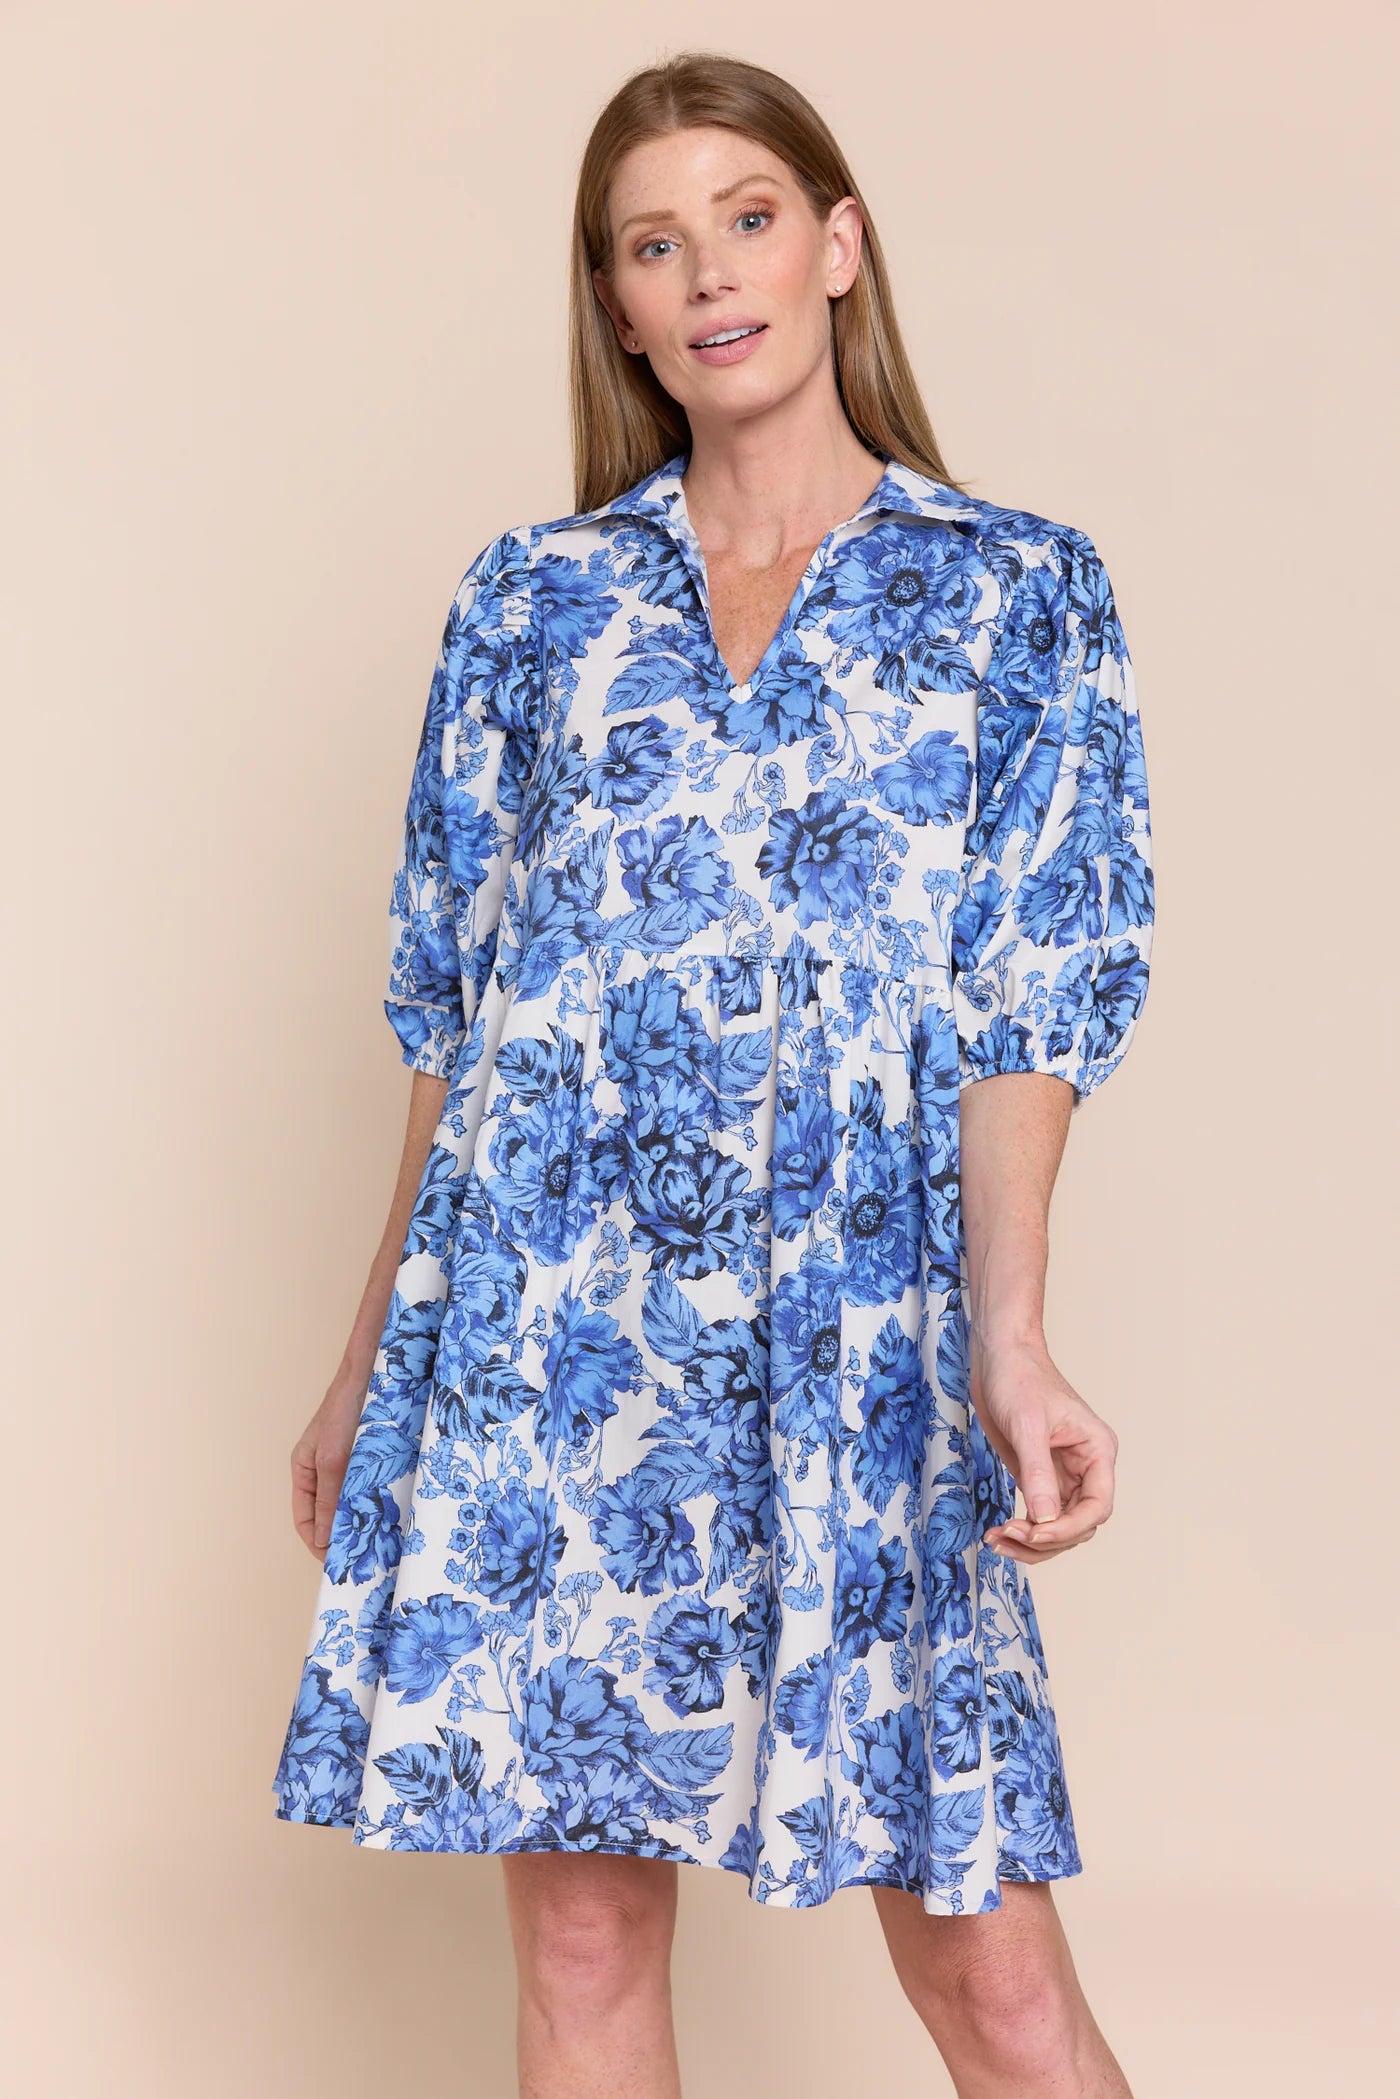 Sofia Fleur One Size Dress- Blue Garden